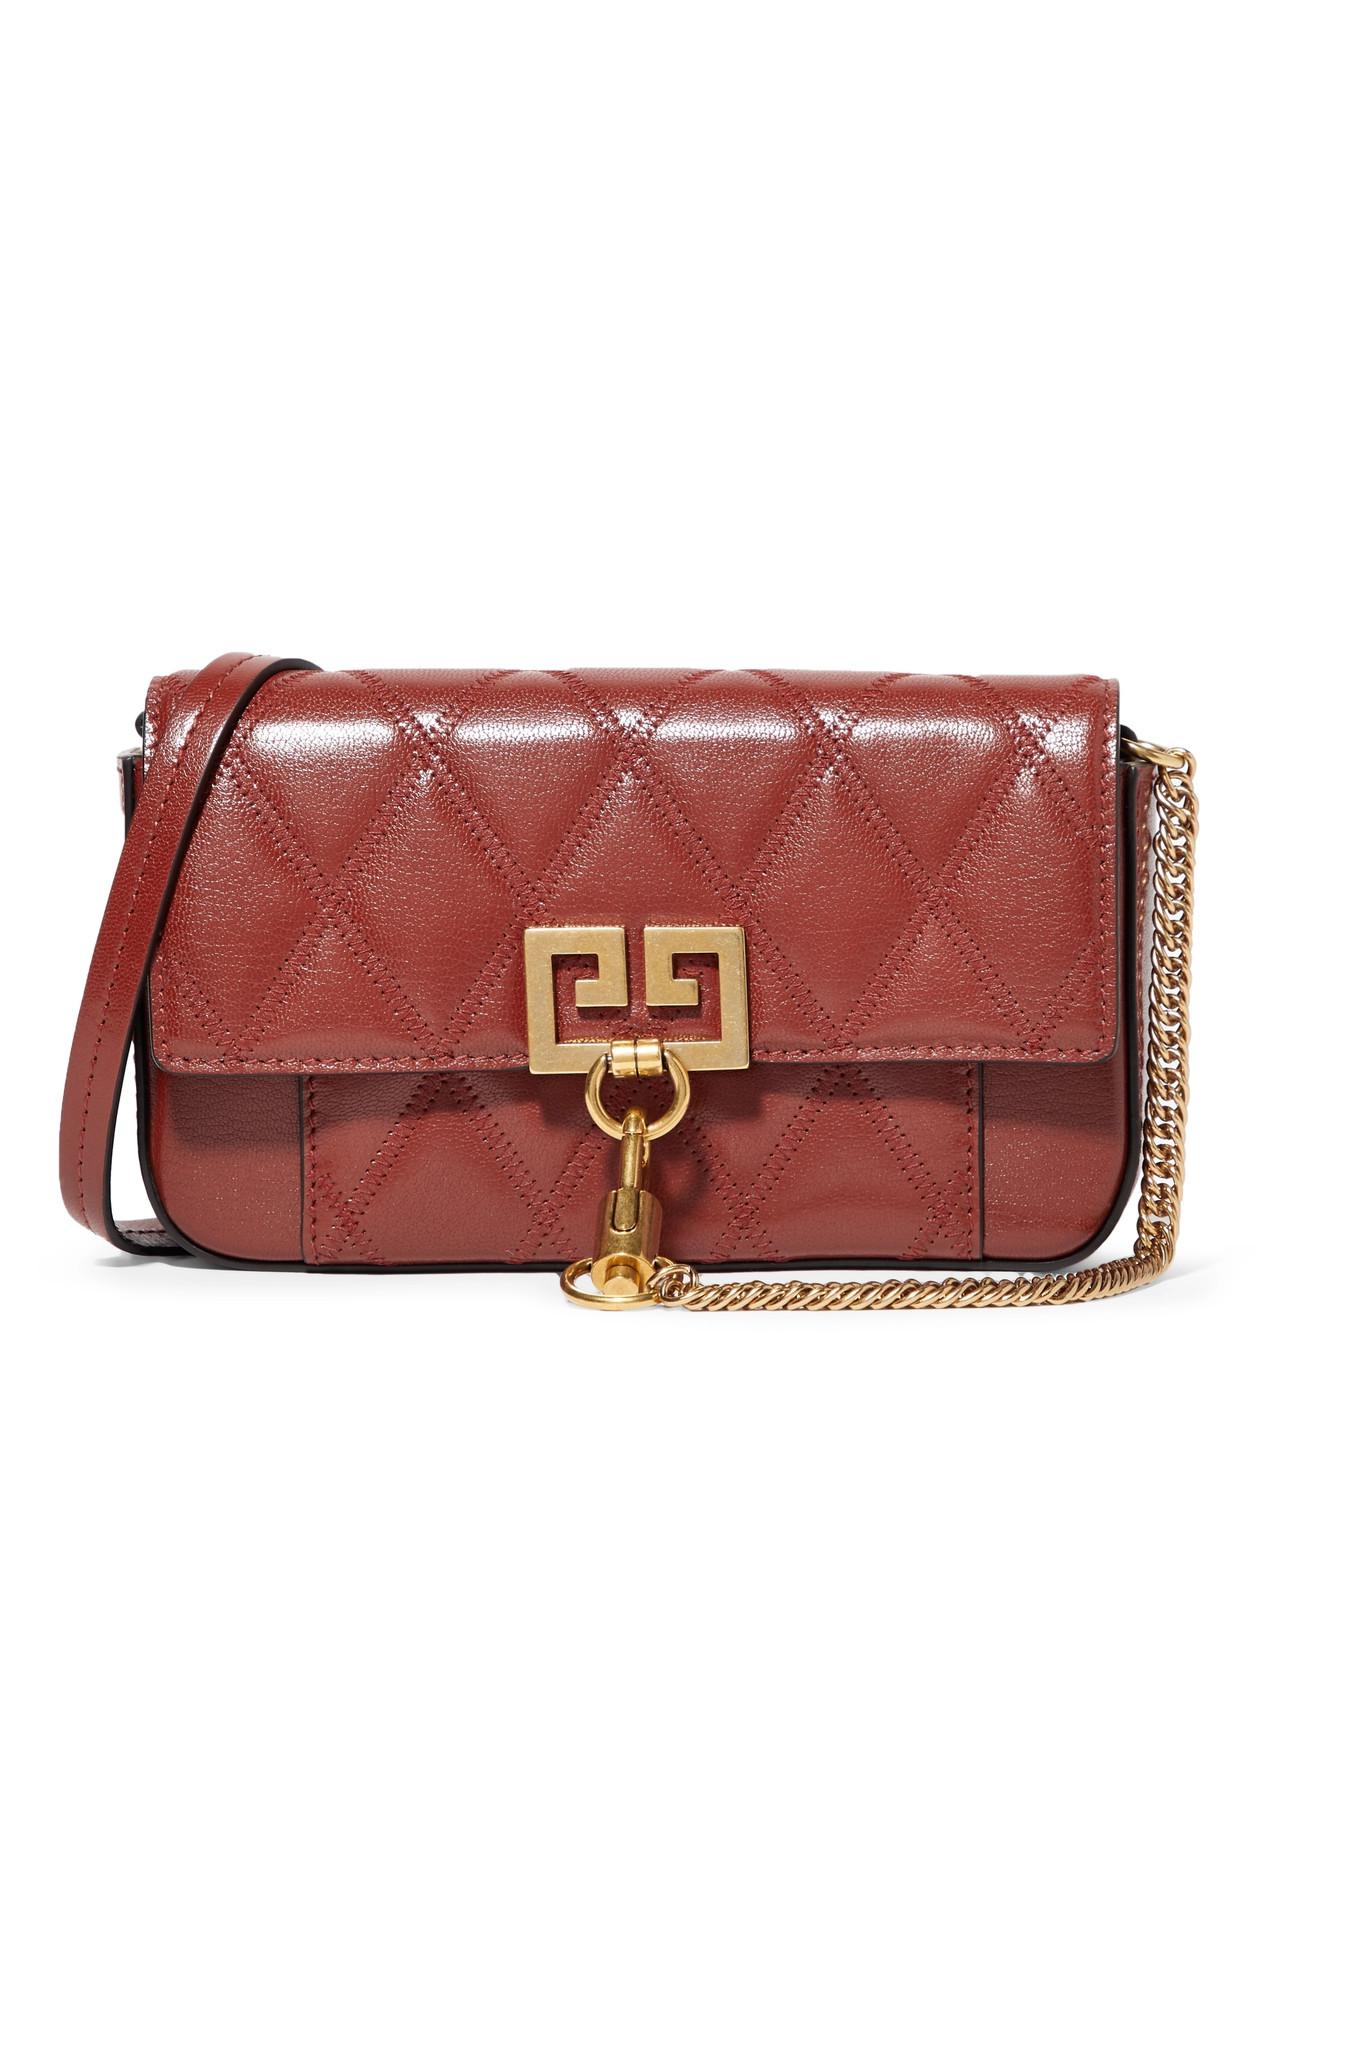 Givenchy Pocket Mini Quilted Leather Shoulder Bag - Lyst